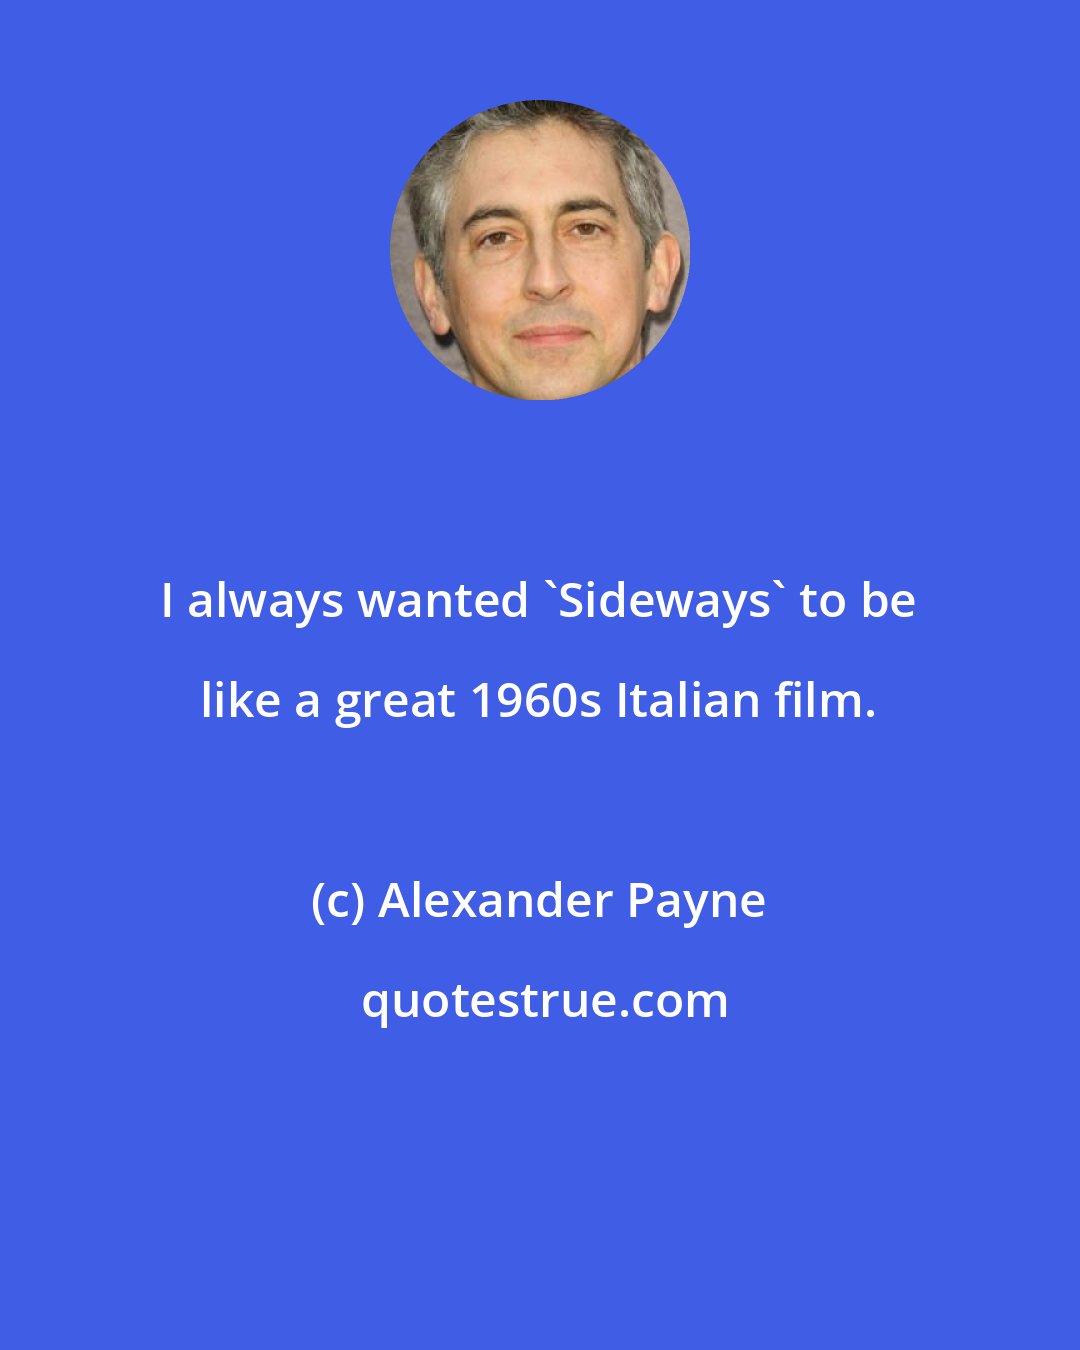 Alexander Payne: I always wanted 'Sideways' to be like a great 1960s Italian film.